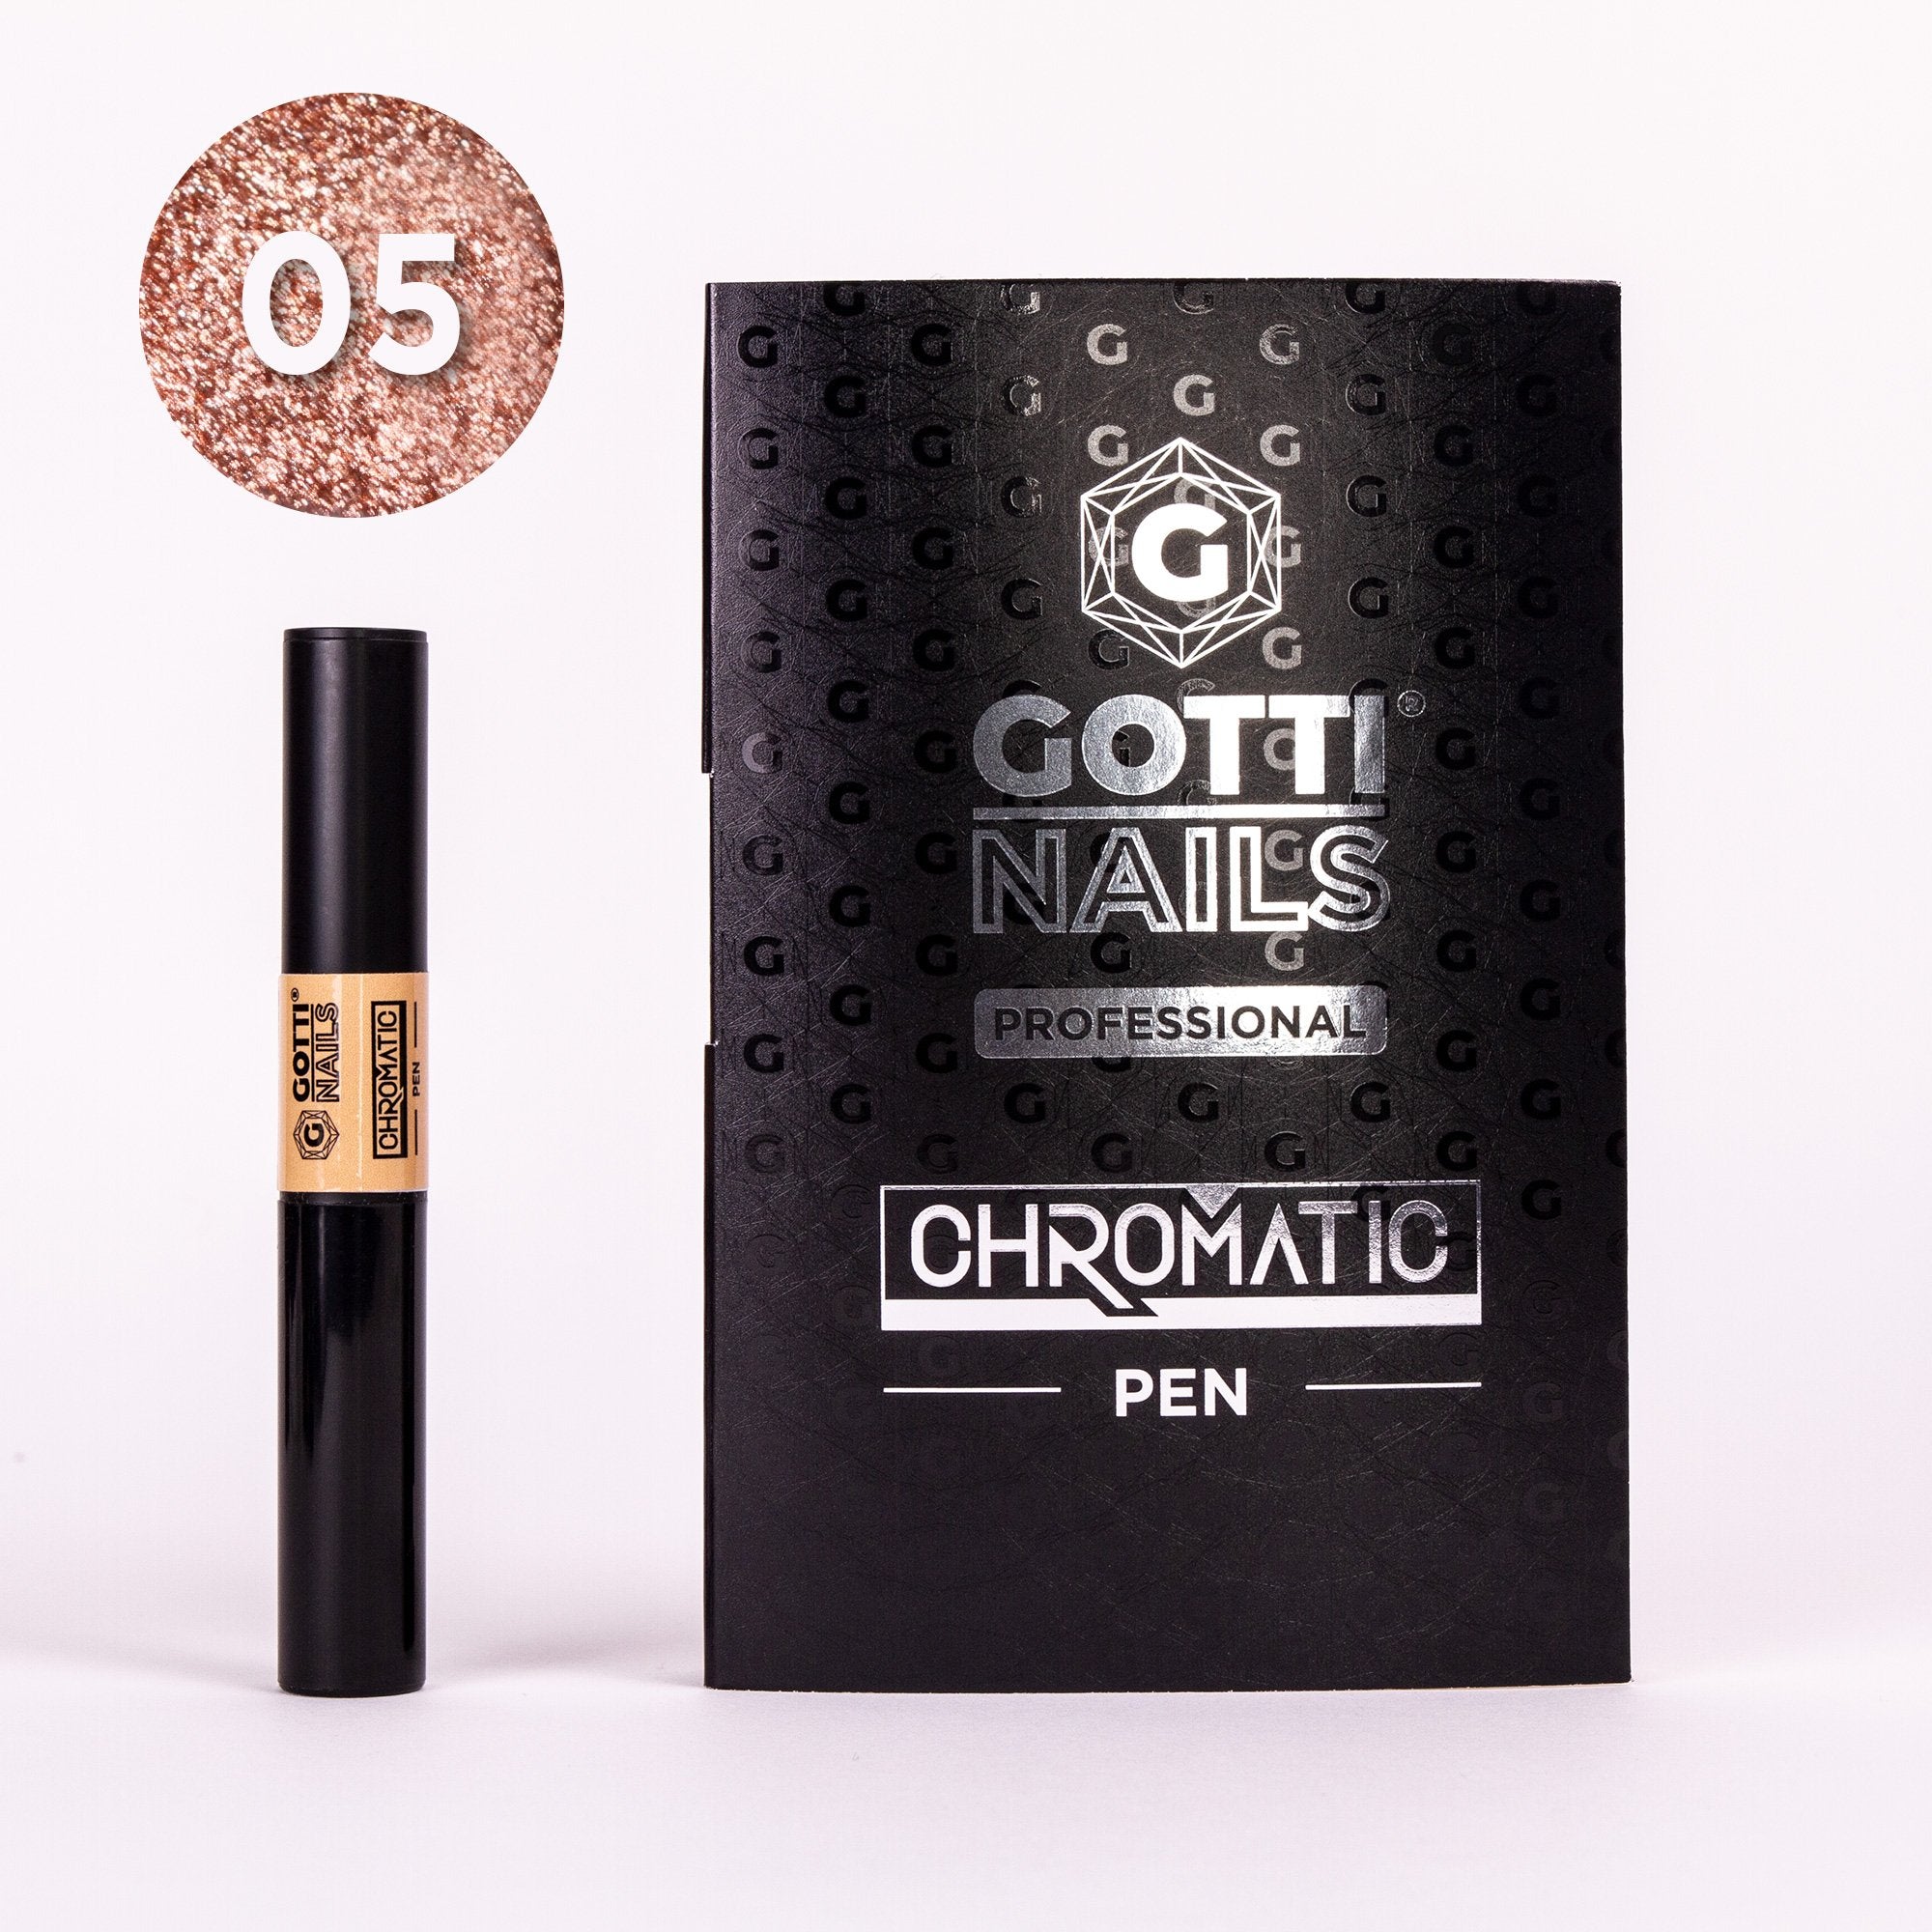 Chromatic Pen #05 by Gotti Nails